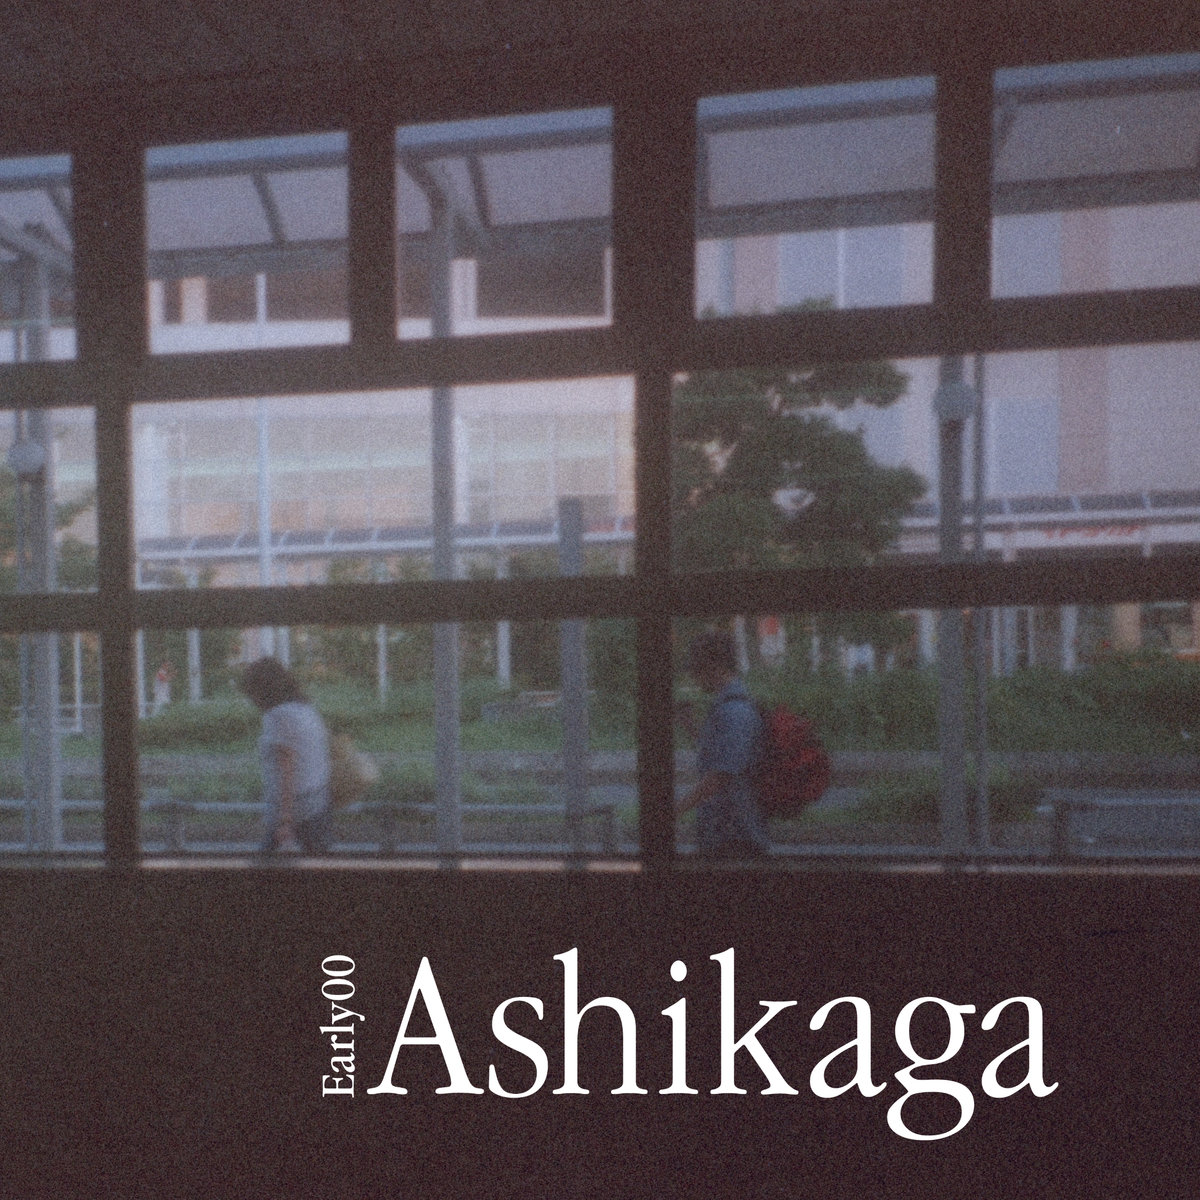 Early00 - "Ashikaga" (Release)